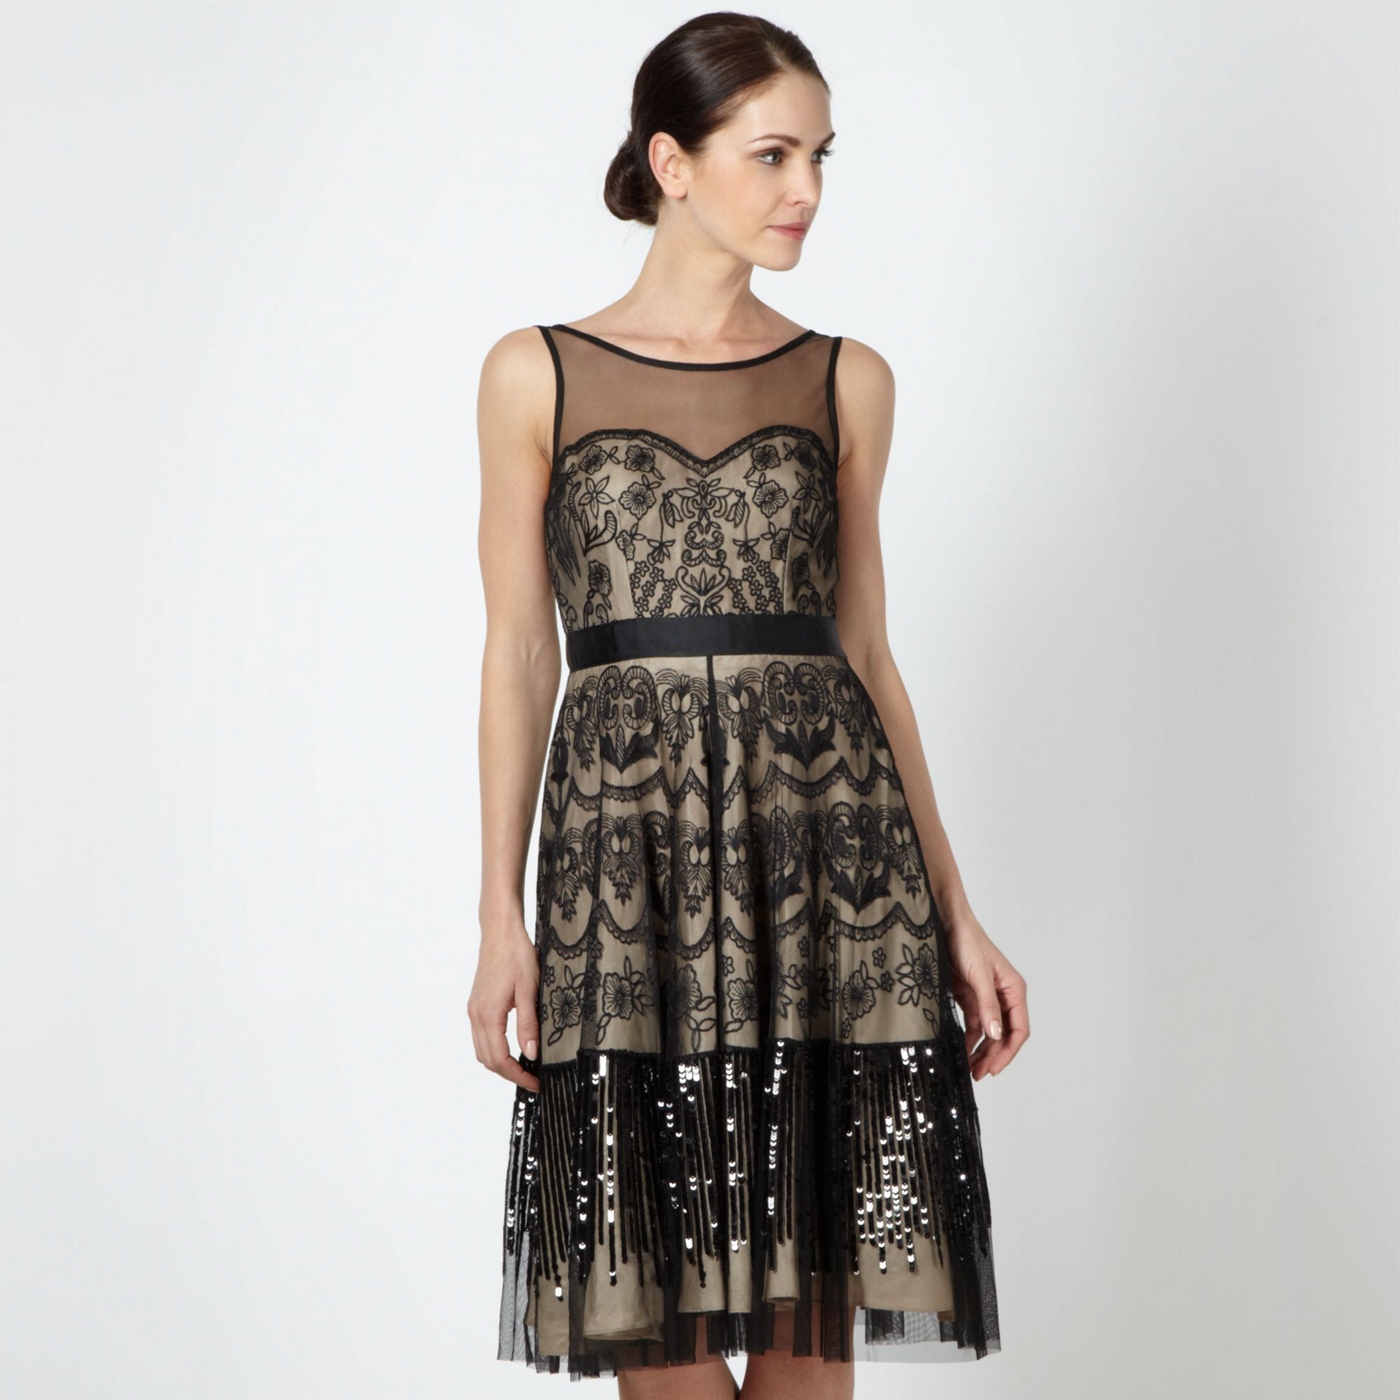 No. 1 Jenny Packham Designer black embroidered overlay dress